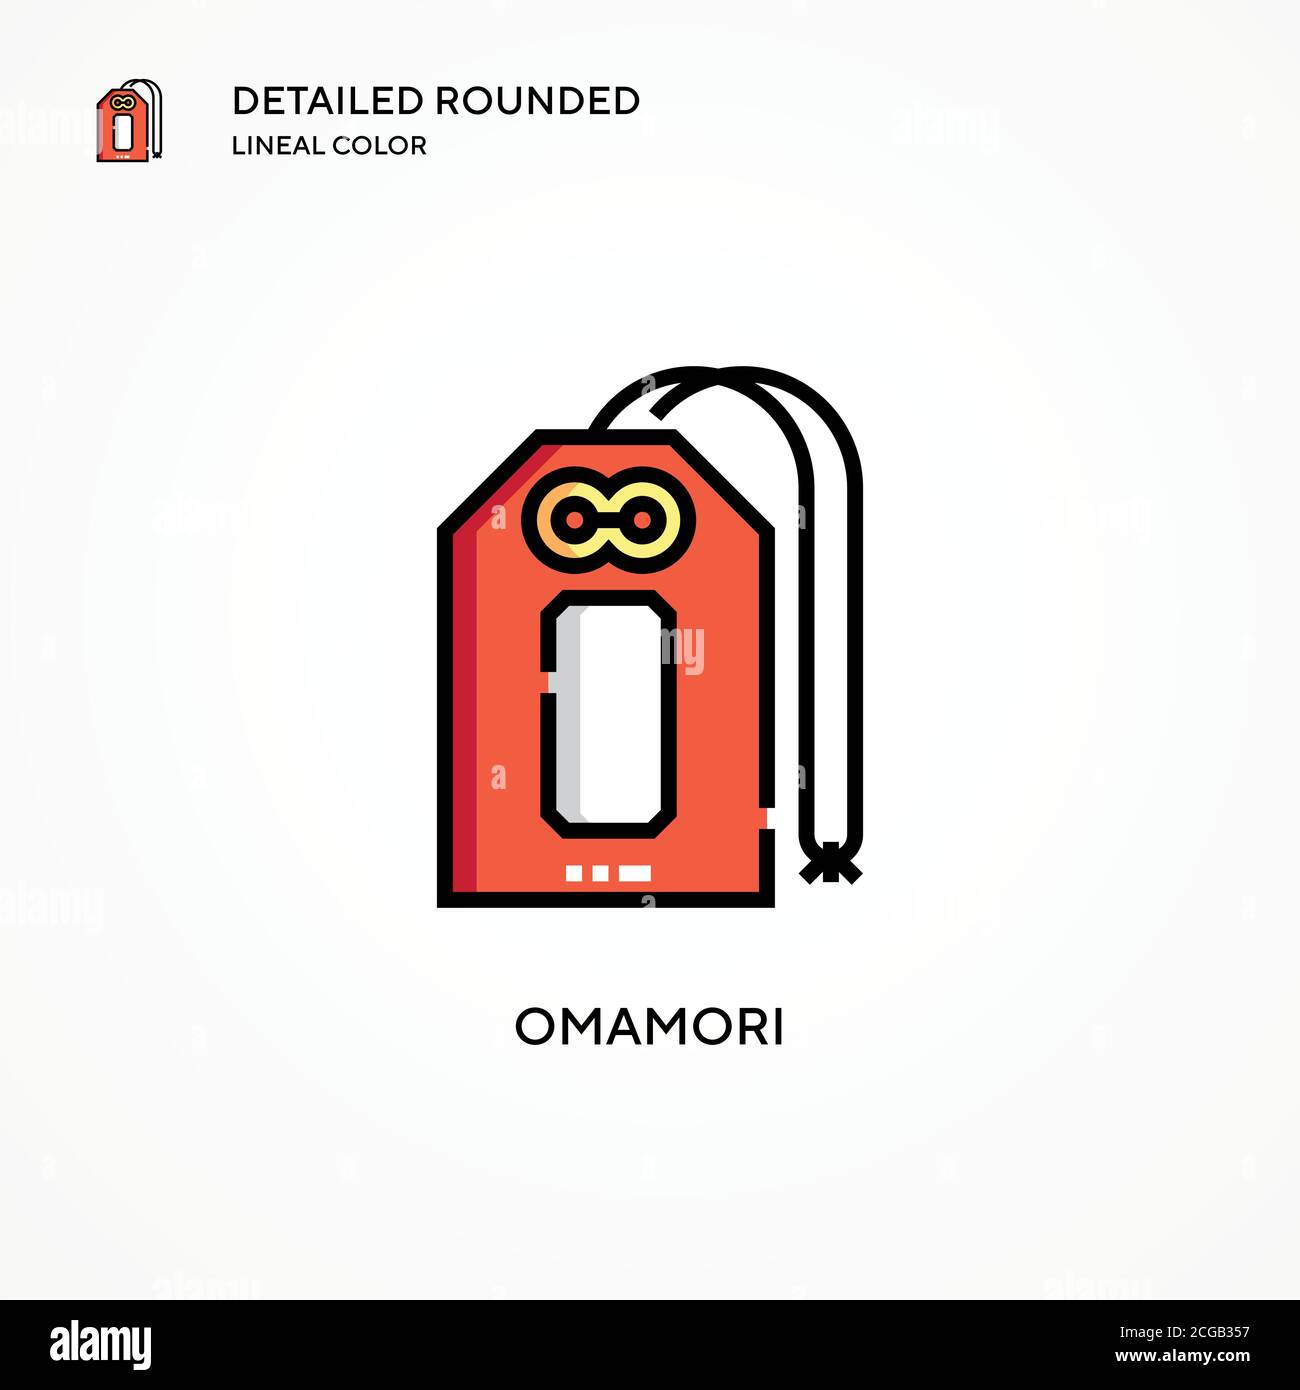 Omamori-Vektorsymbol. Moderne Vektorgrafik Konzepte. Einfach zu bearbeiten und anzupassen. Stock Vektor